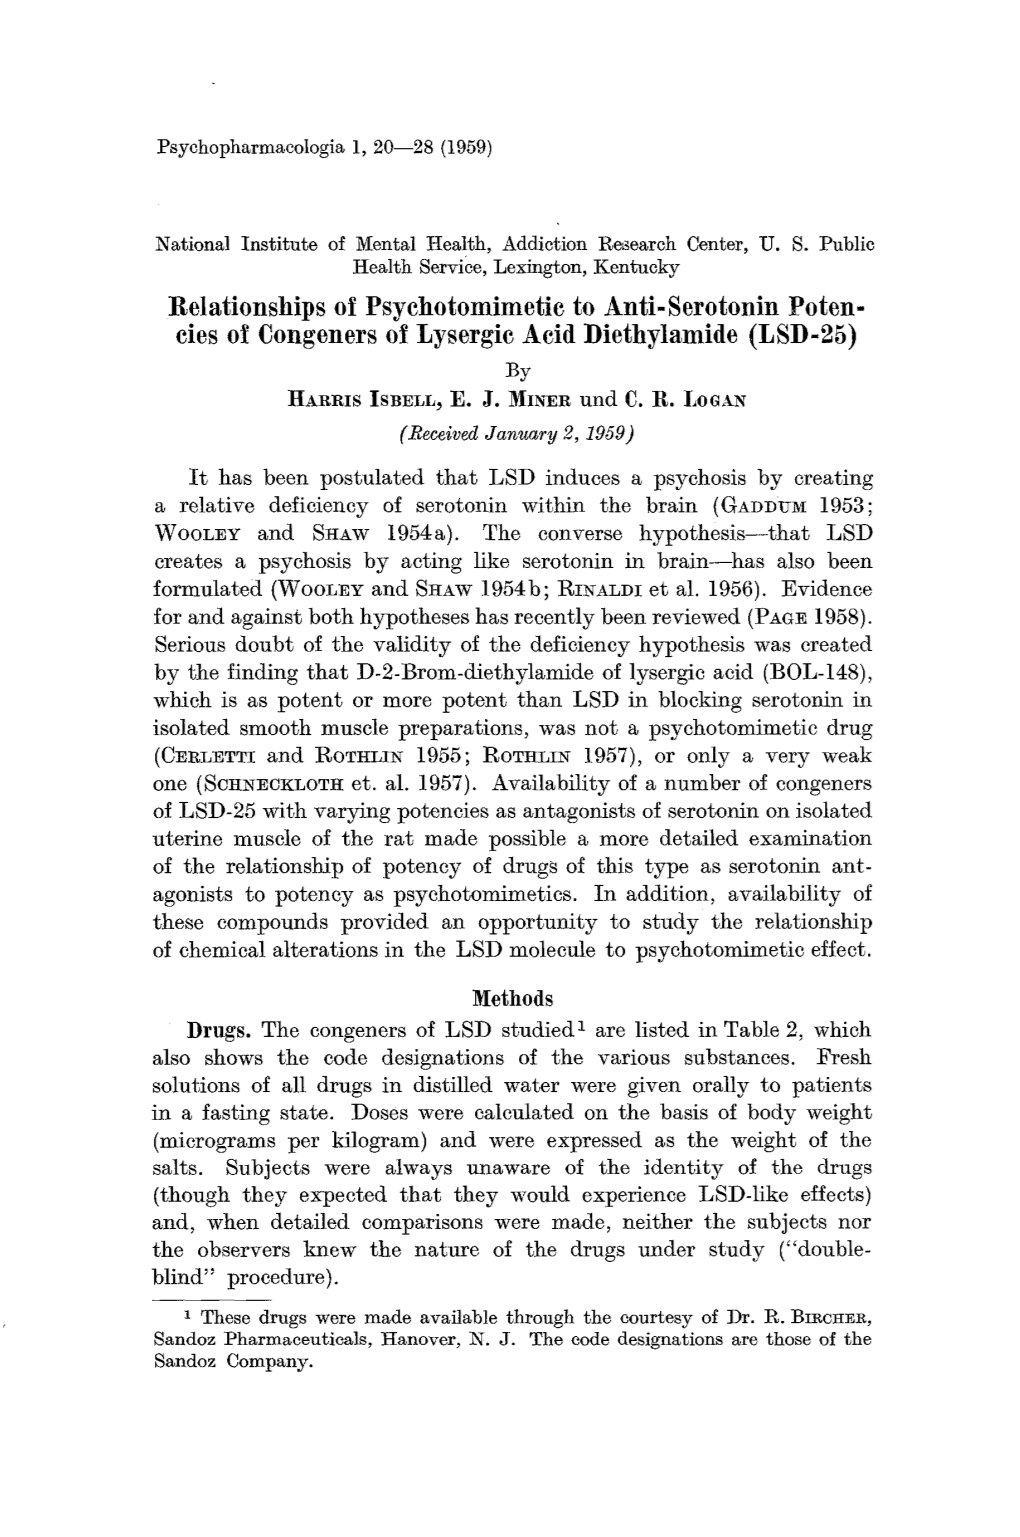 Relationships of Psychotomimetic to Anti-Serotonin Potencies Of